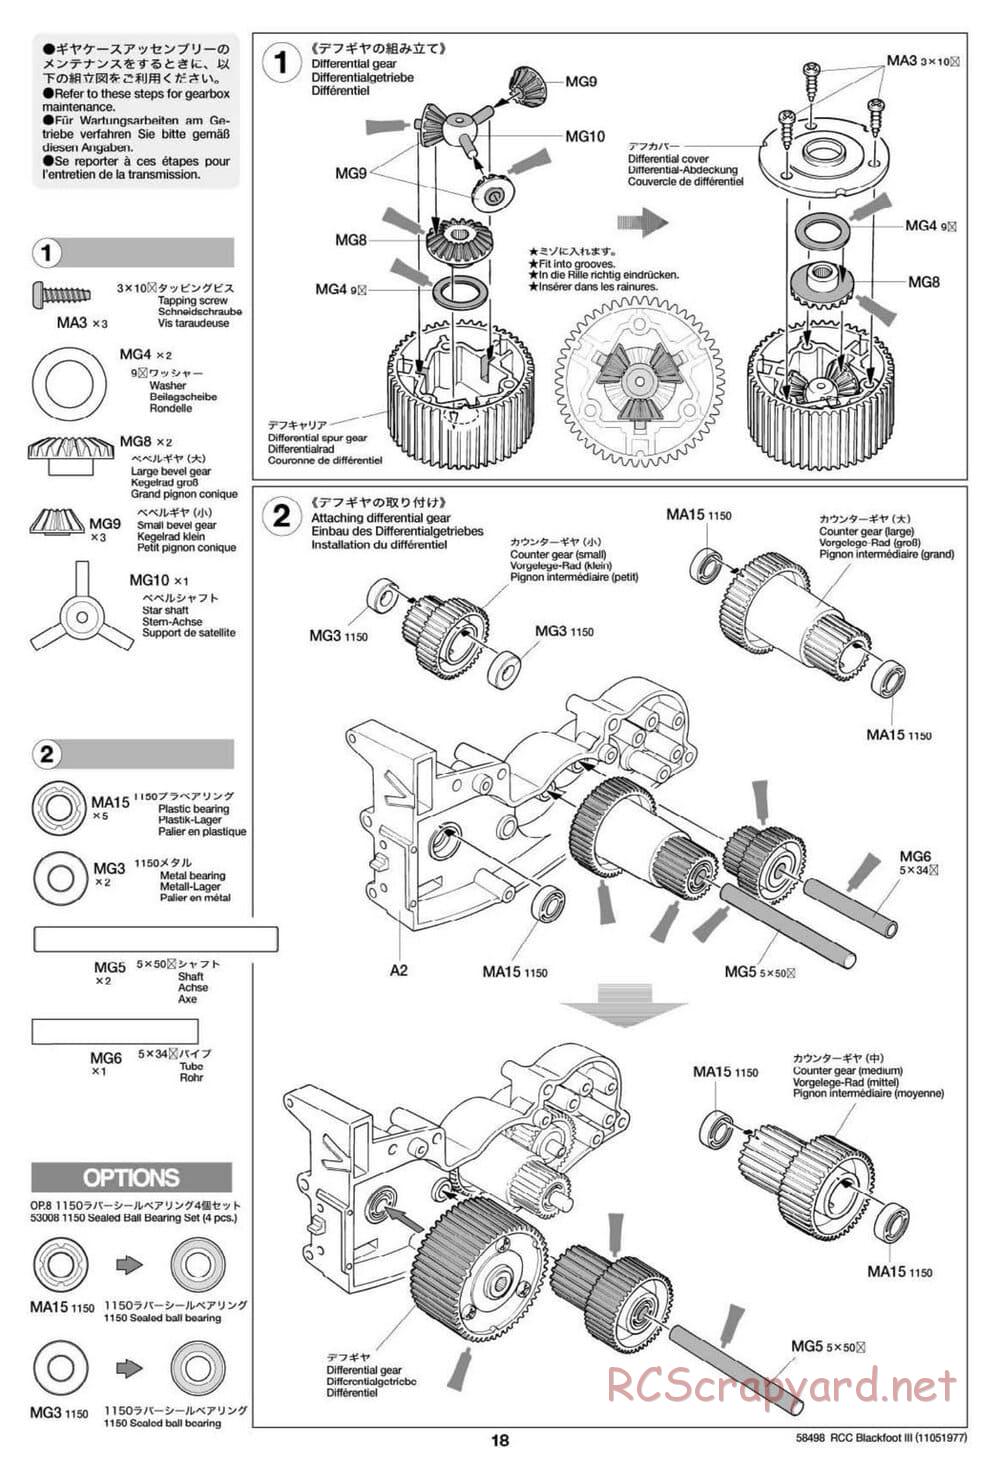 Tamiya - Blackfoot III - WT-01 Chassis - Manual - Page 18